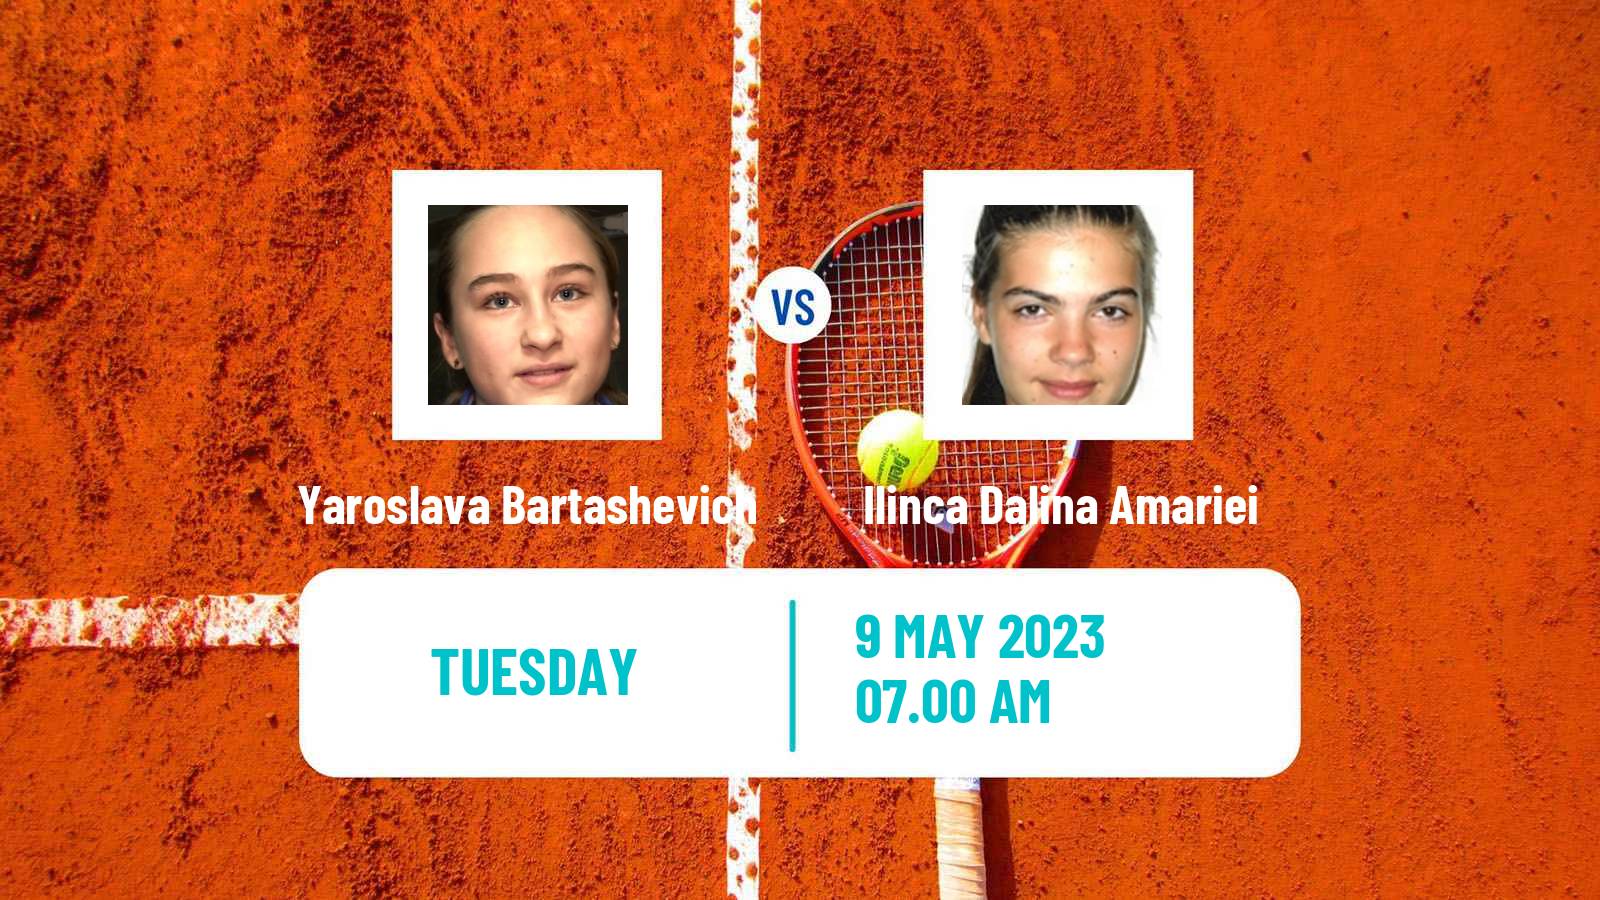 Tennis ITF Tournaments Yaroslava Bartashevich - Ilinca Dalina Amariei